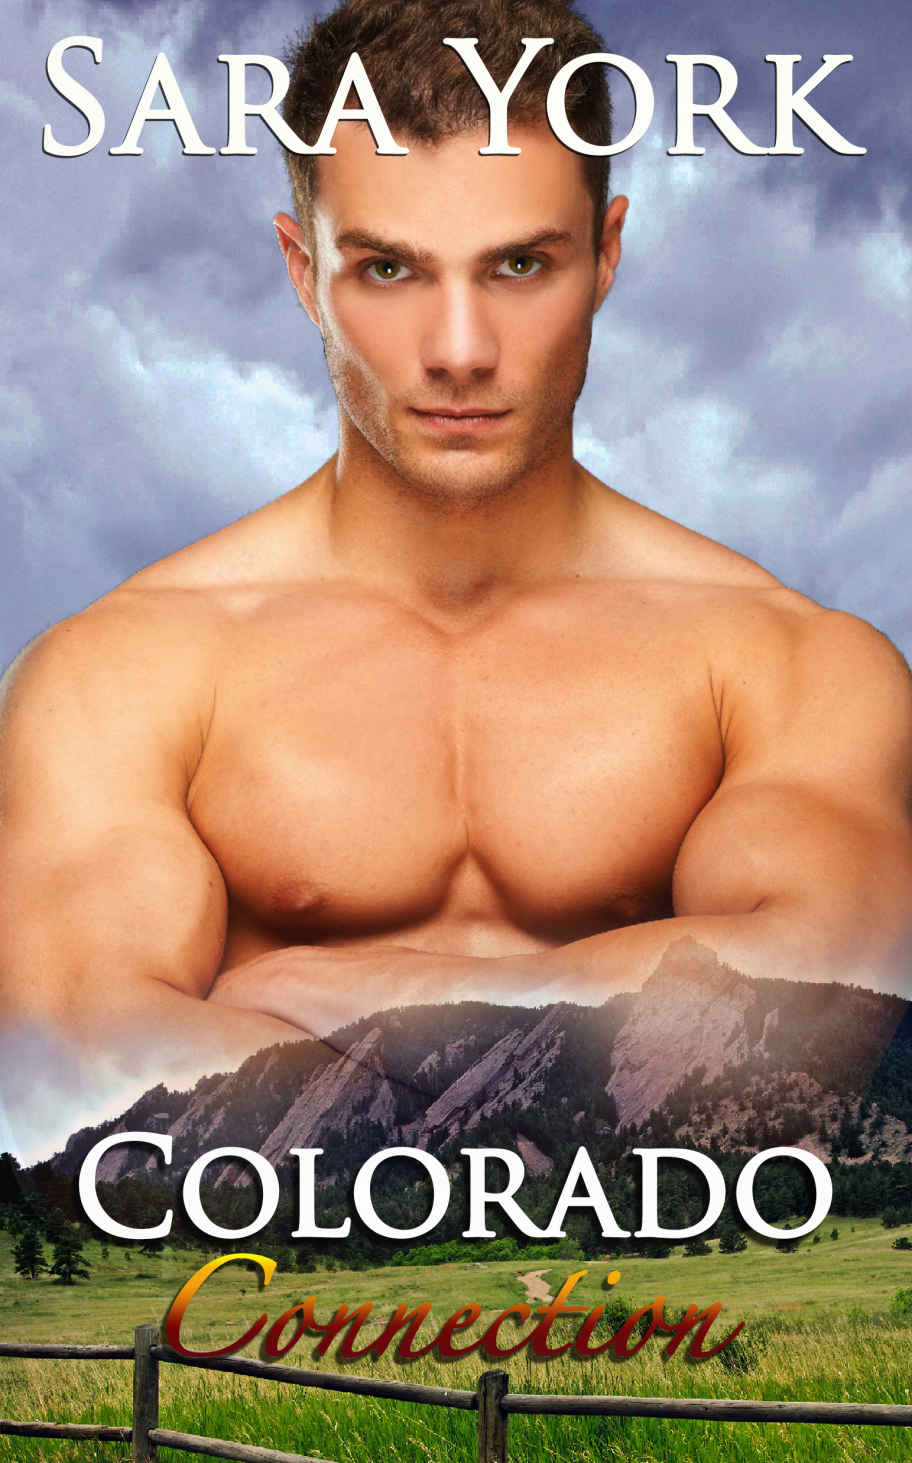 Colorado Connection (Colorado Heart Book 6)